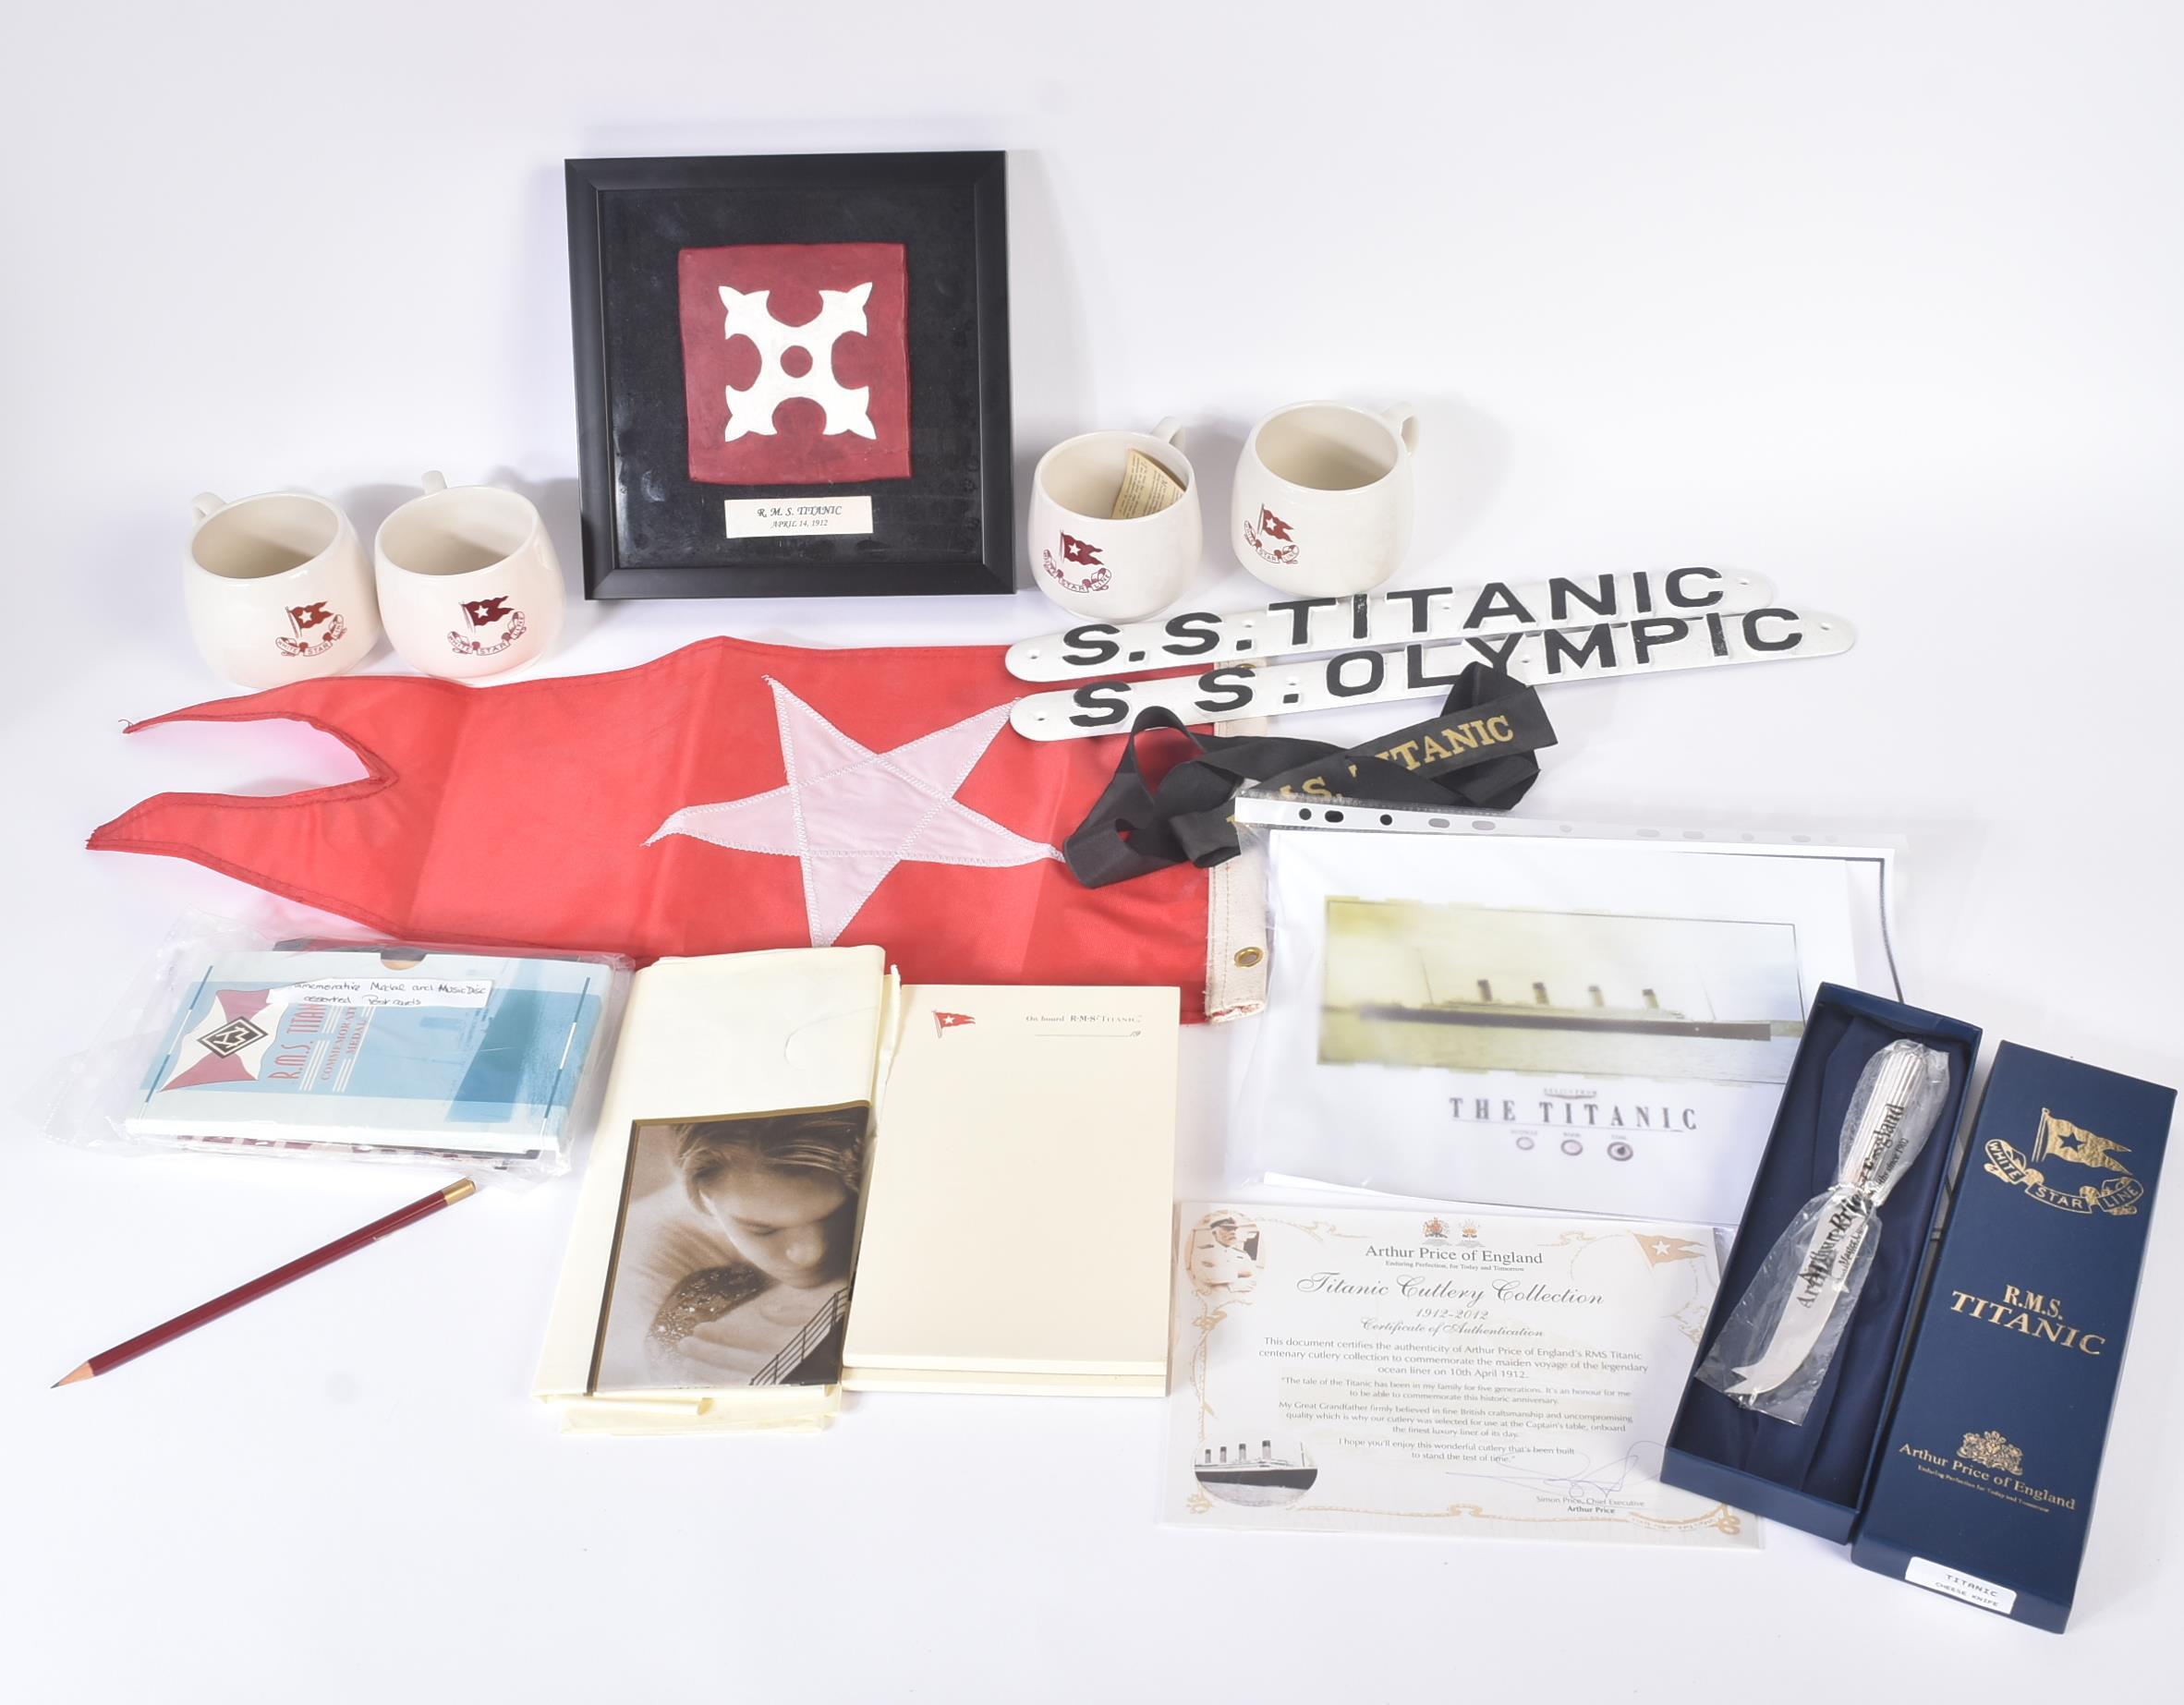 RMS TITANIC - COLLECTION OF ASSORTED MEMORABILIA